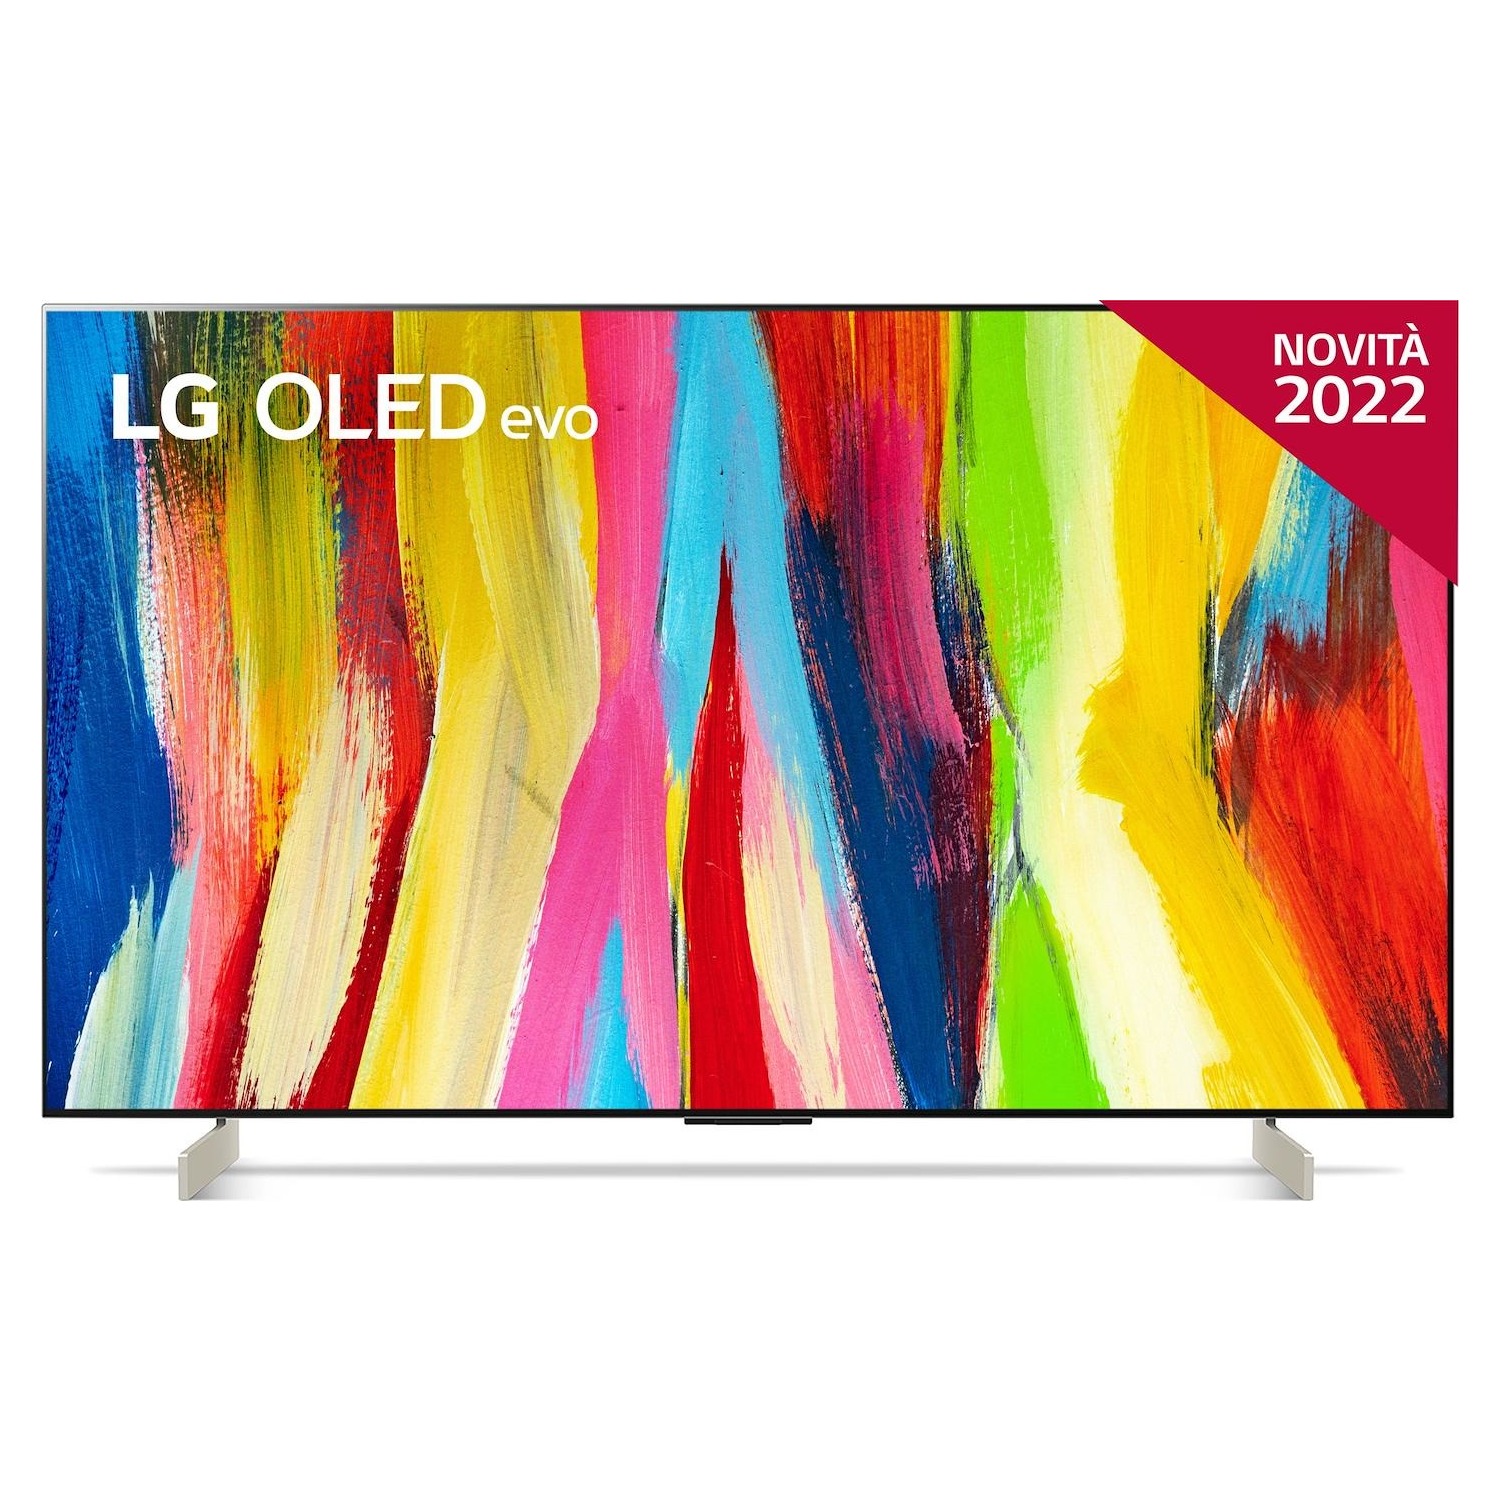 Immagine per TV OLED LG OLED42C26 Calibrato 4K e FULL HD da DIMOStore